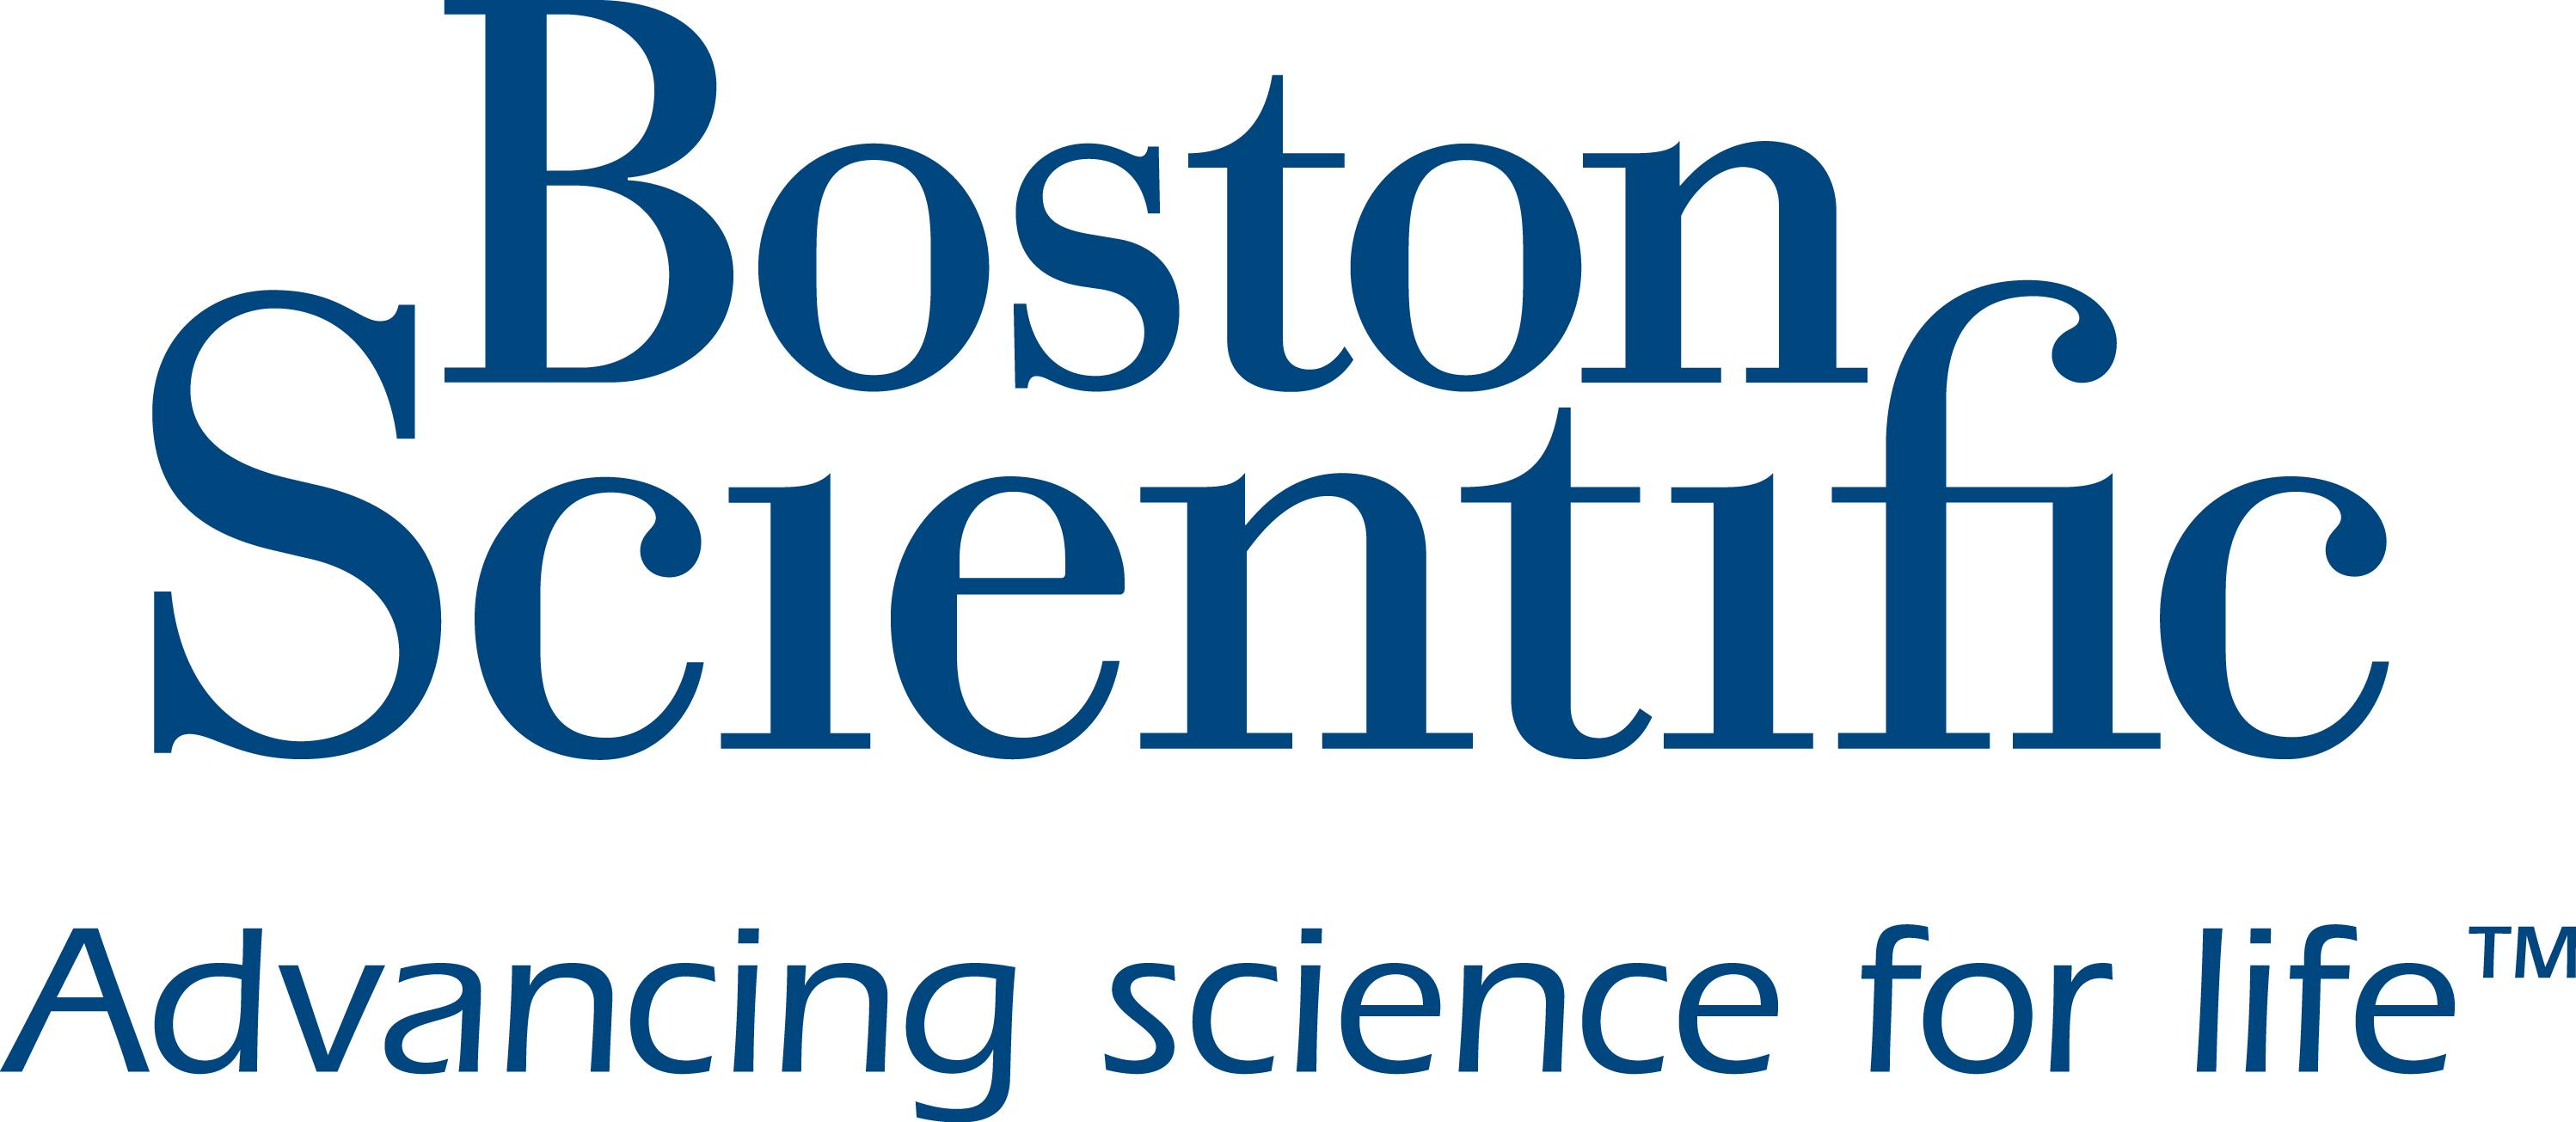 Logotipo de la ciencia de Boston.jpg